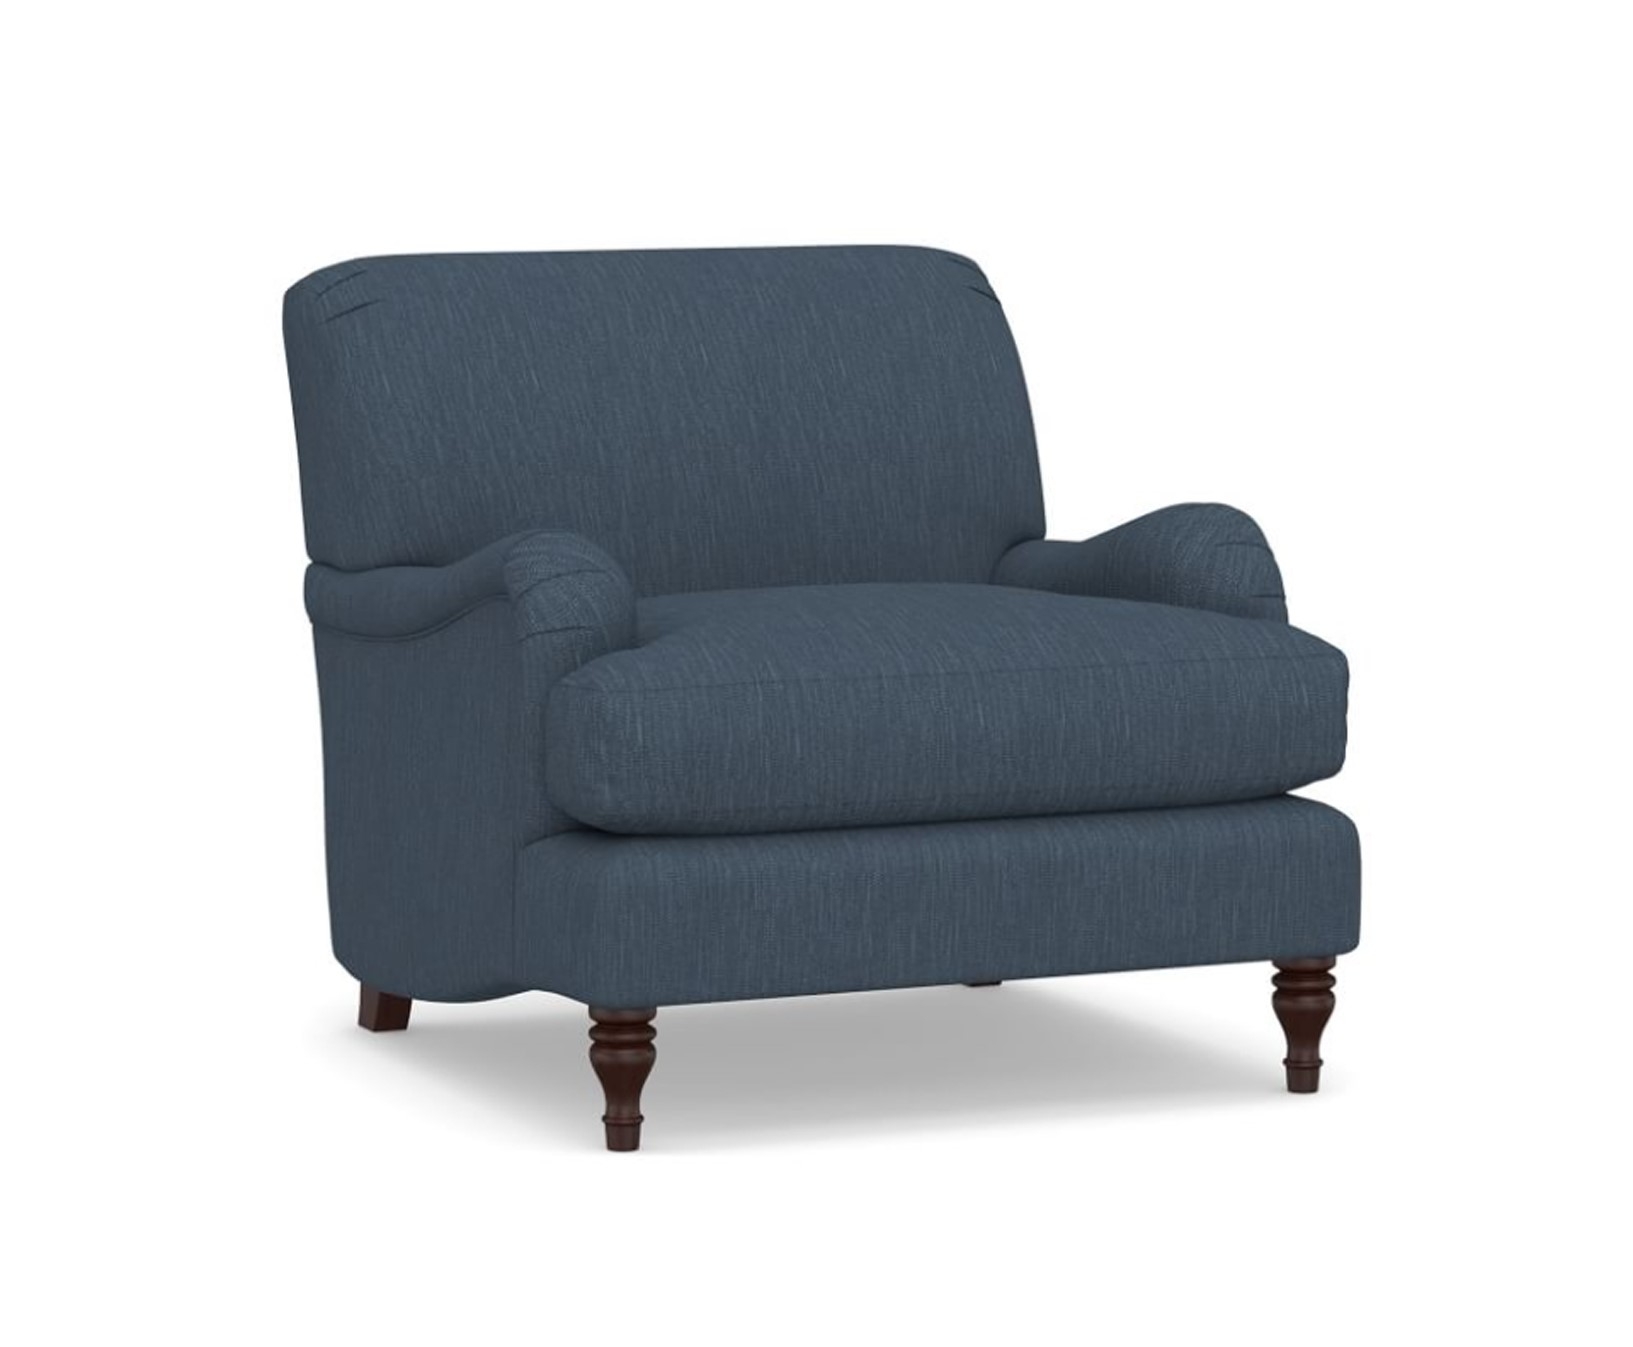 Carlisle English Arm Upholstered Tightback Armchair, Polyester Wrapped Cushions, Performance Heathered Tweed Indigo - Image 0